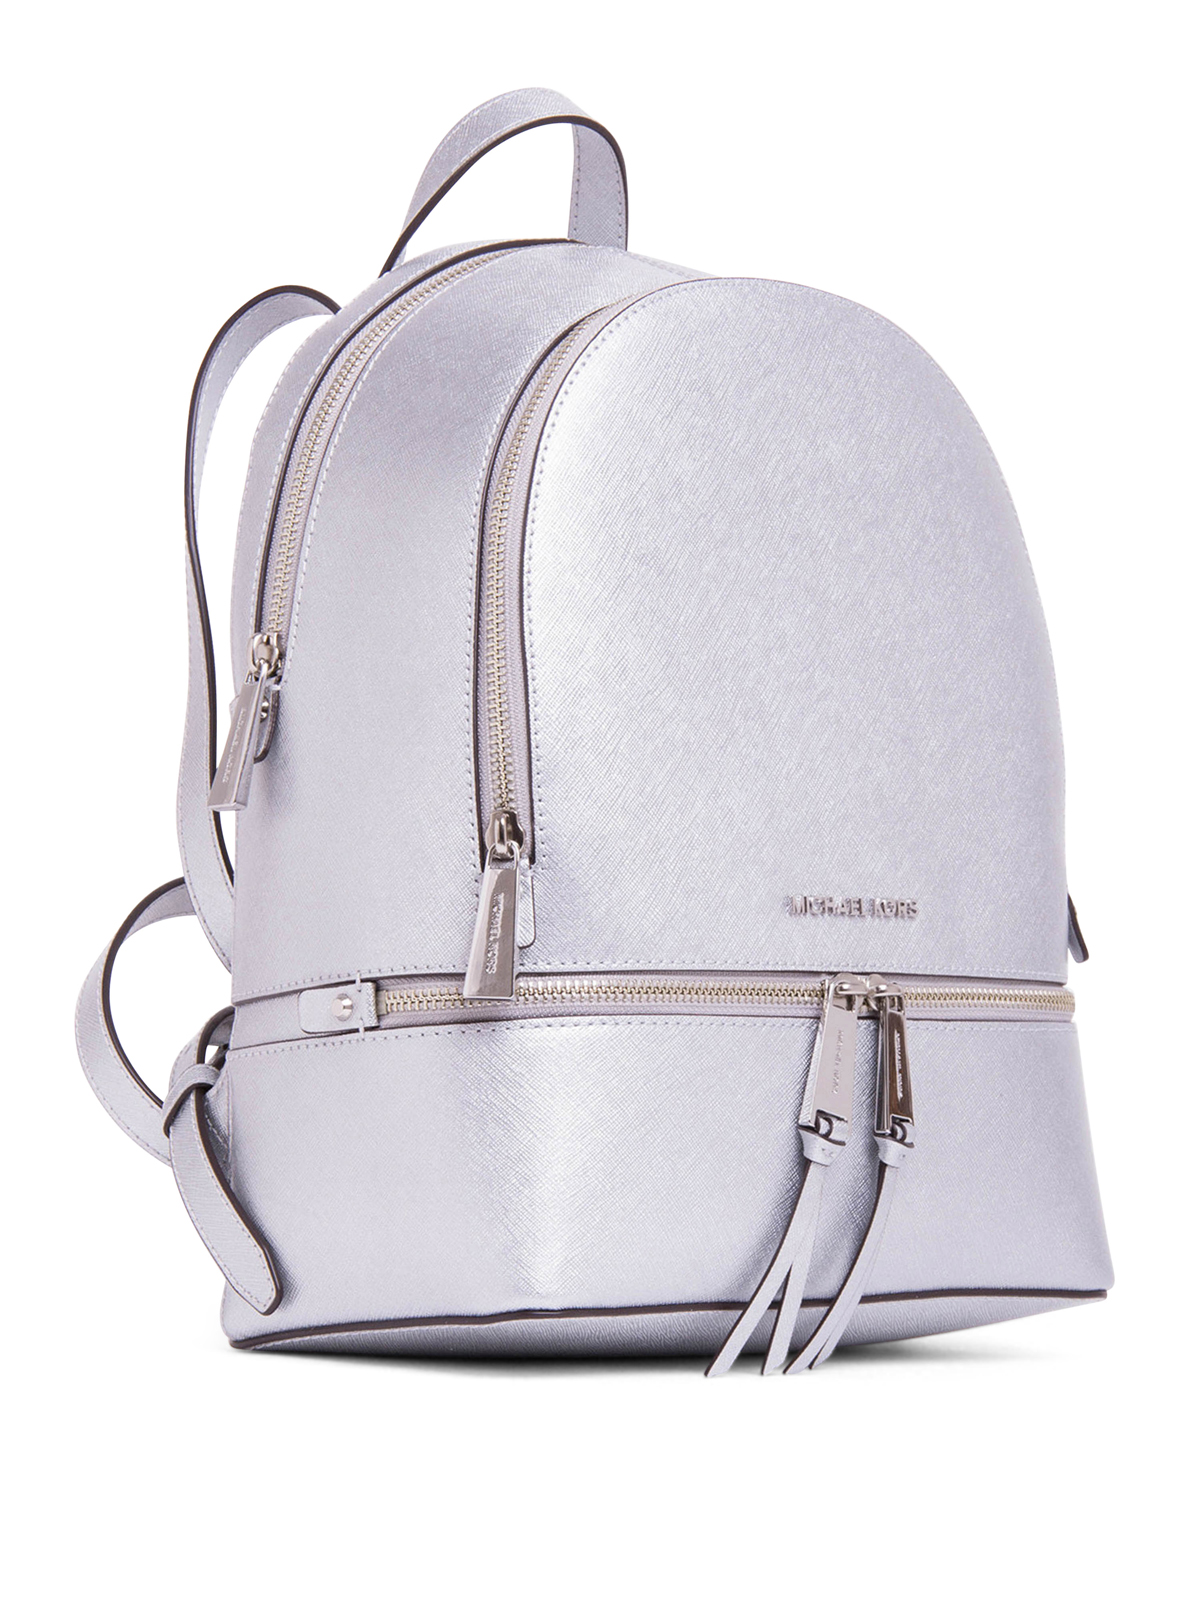 michael kors silver backpack